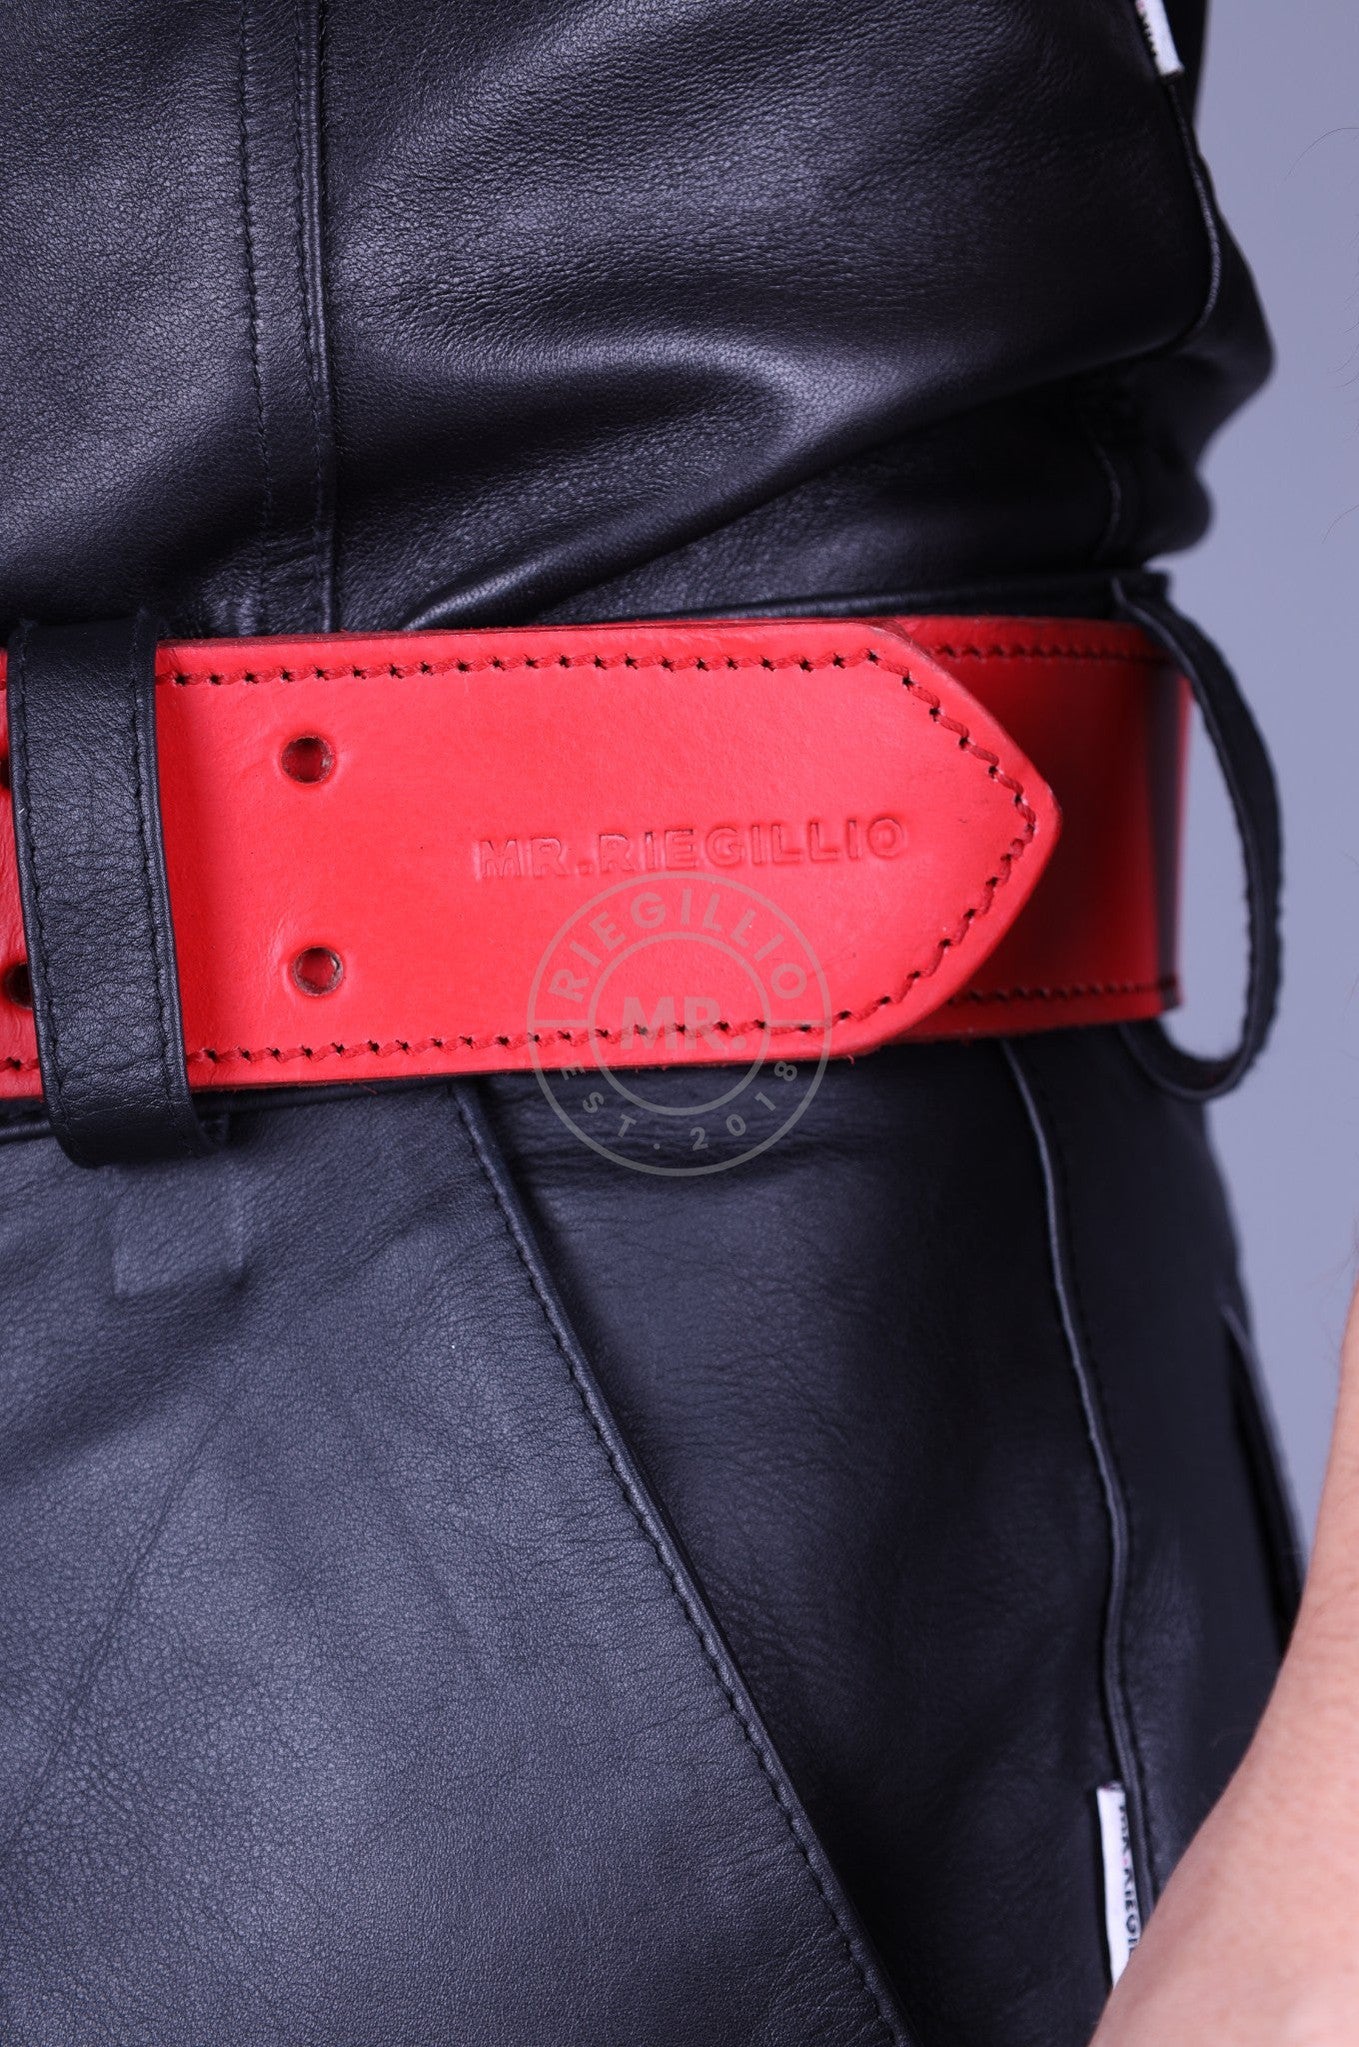 Red Leather Belt at MR. Riegillio